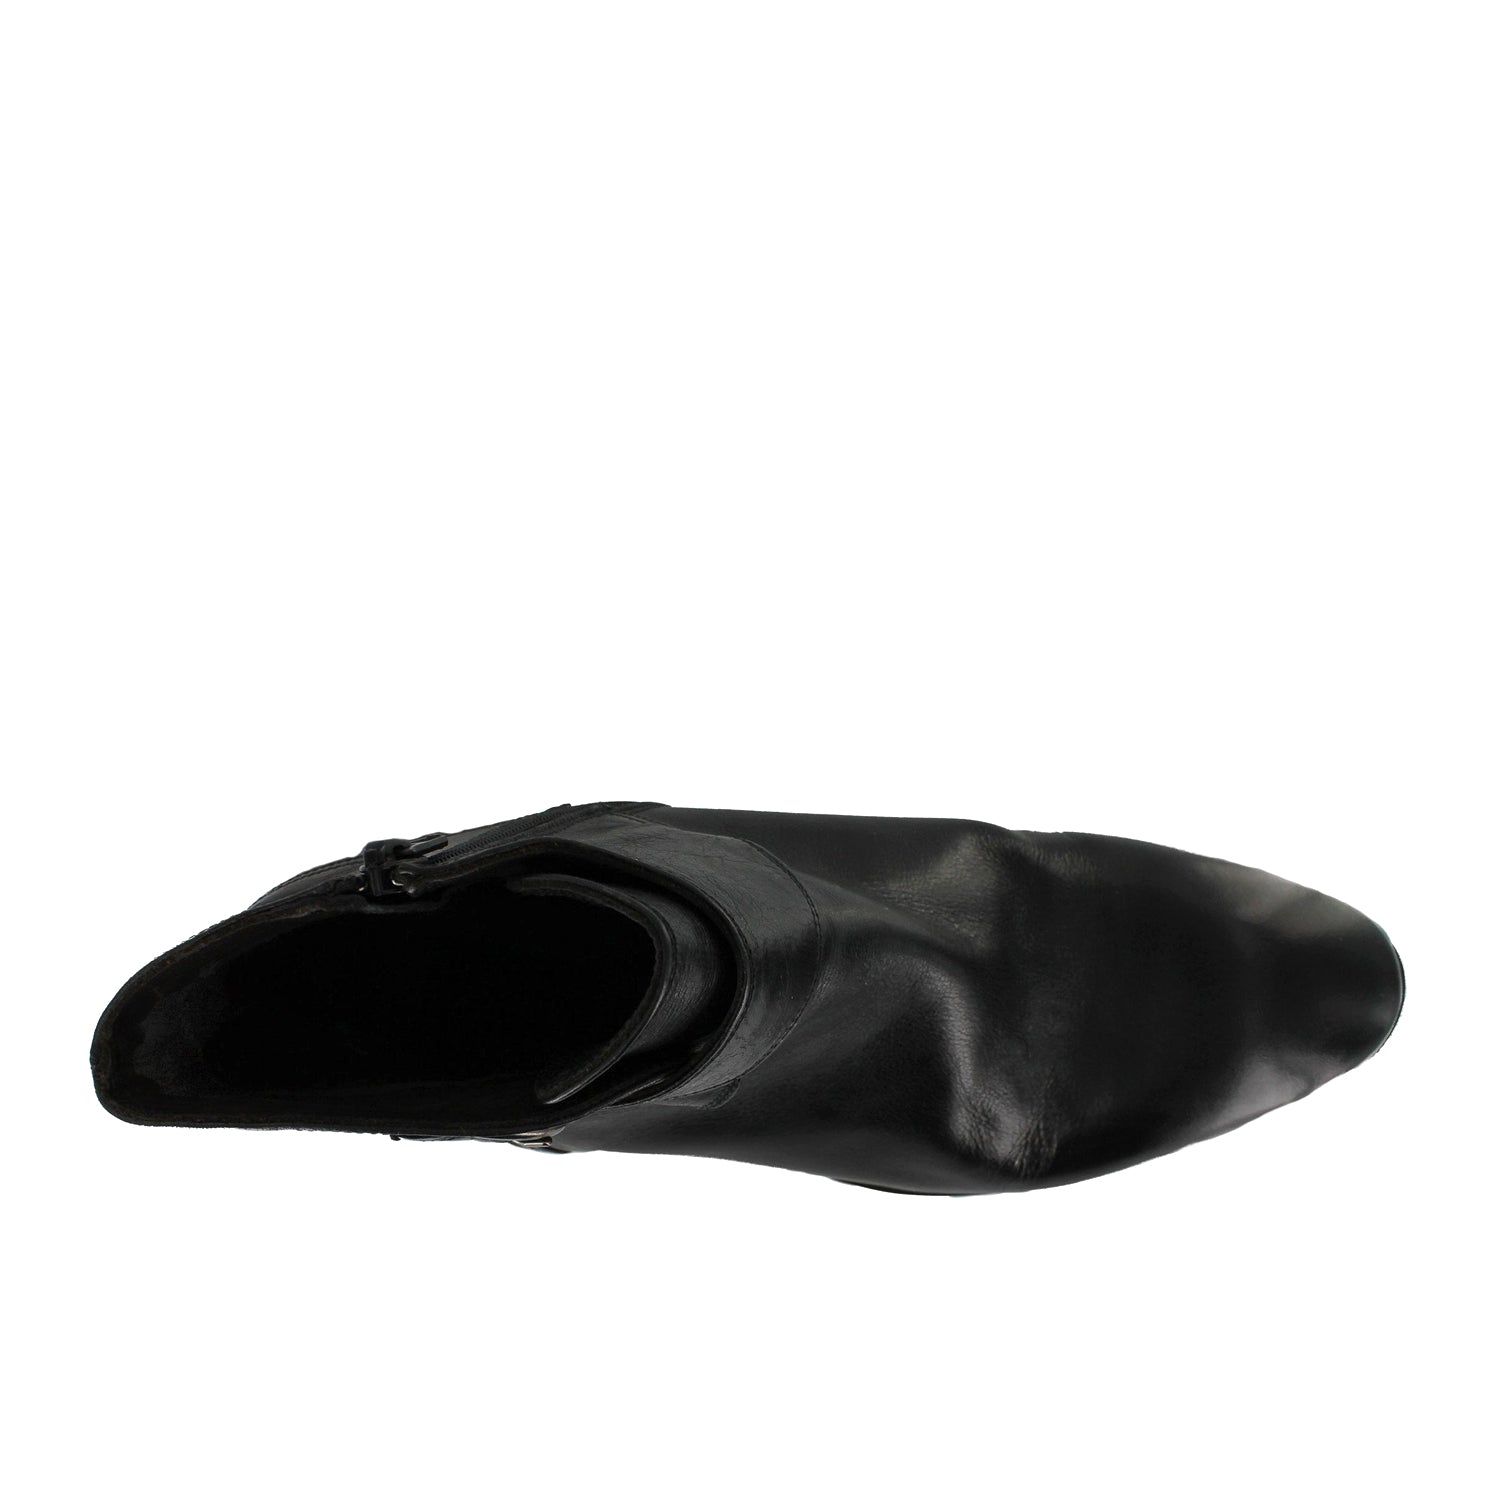 Tabias - Black Strap Ankle Boot